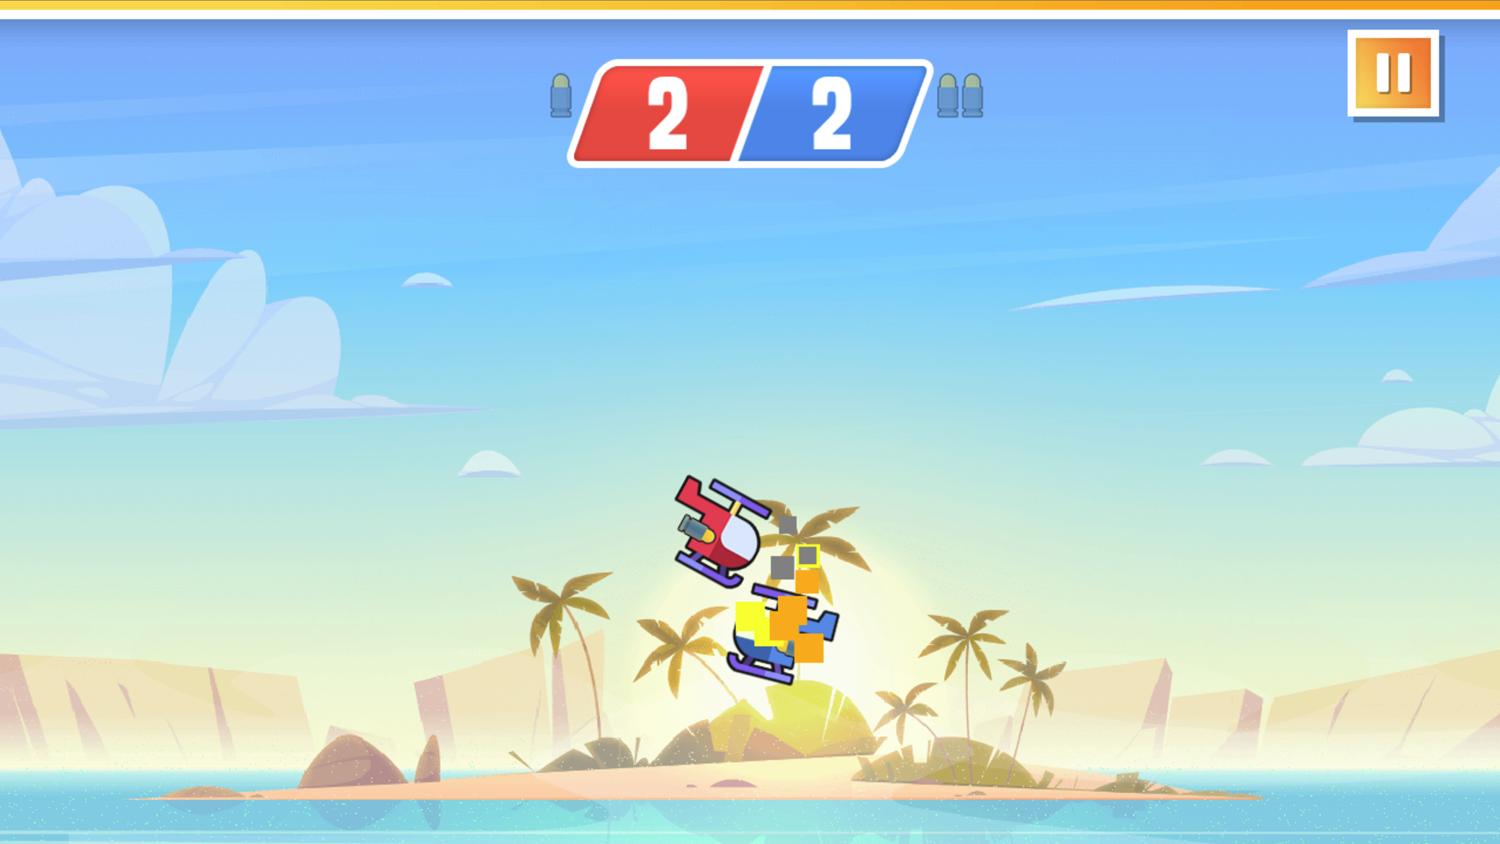 Heli Battle Game Crashing Opponent Screenshot.